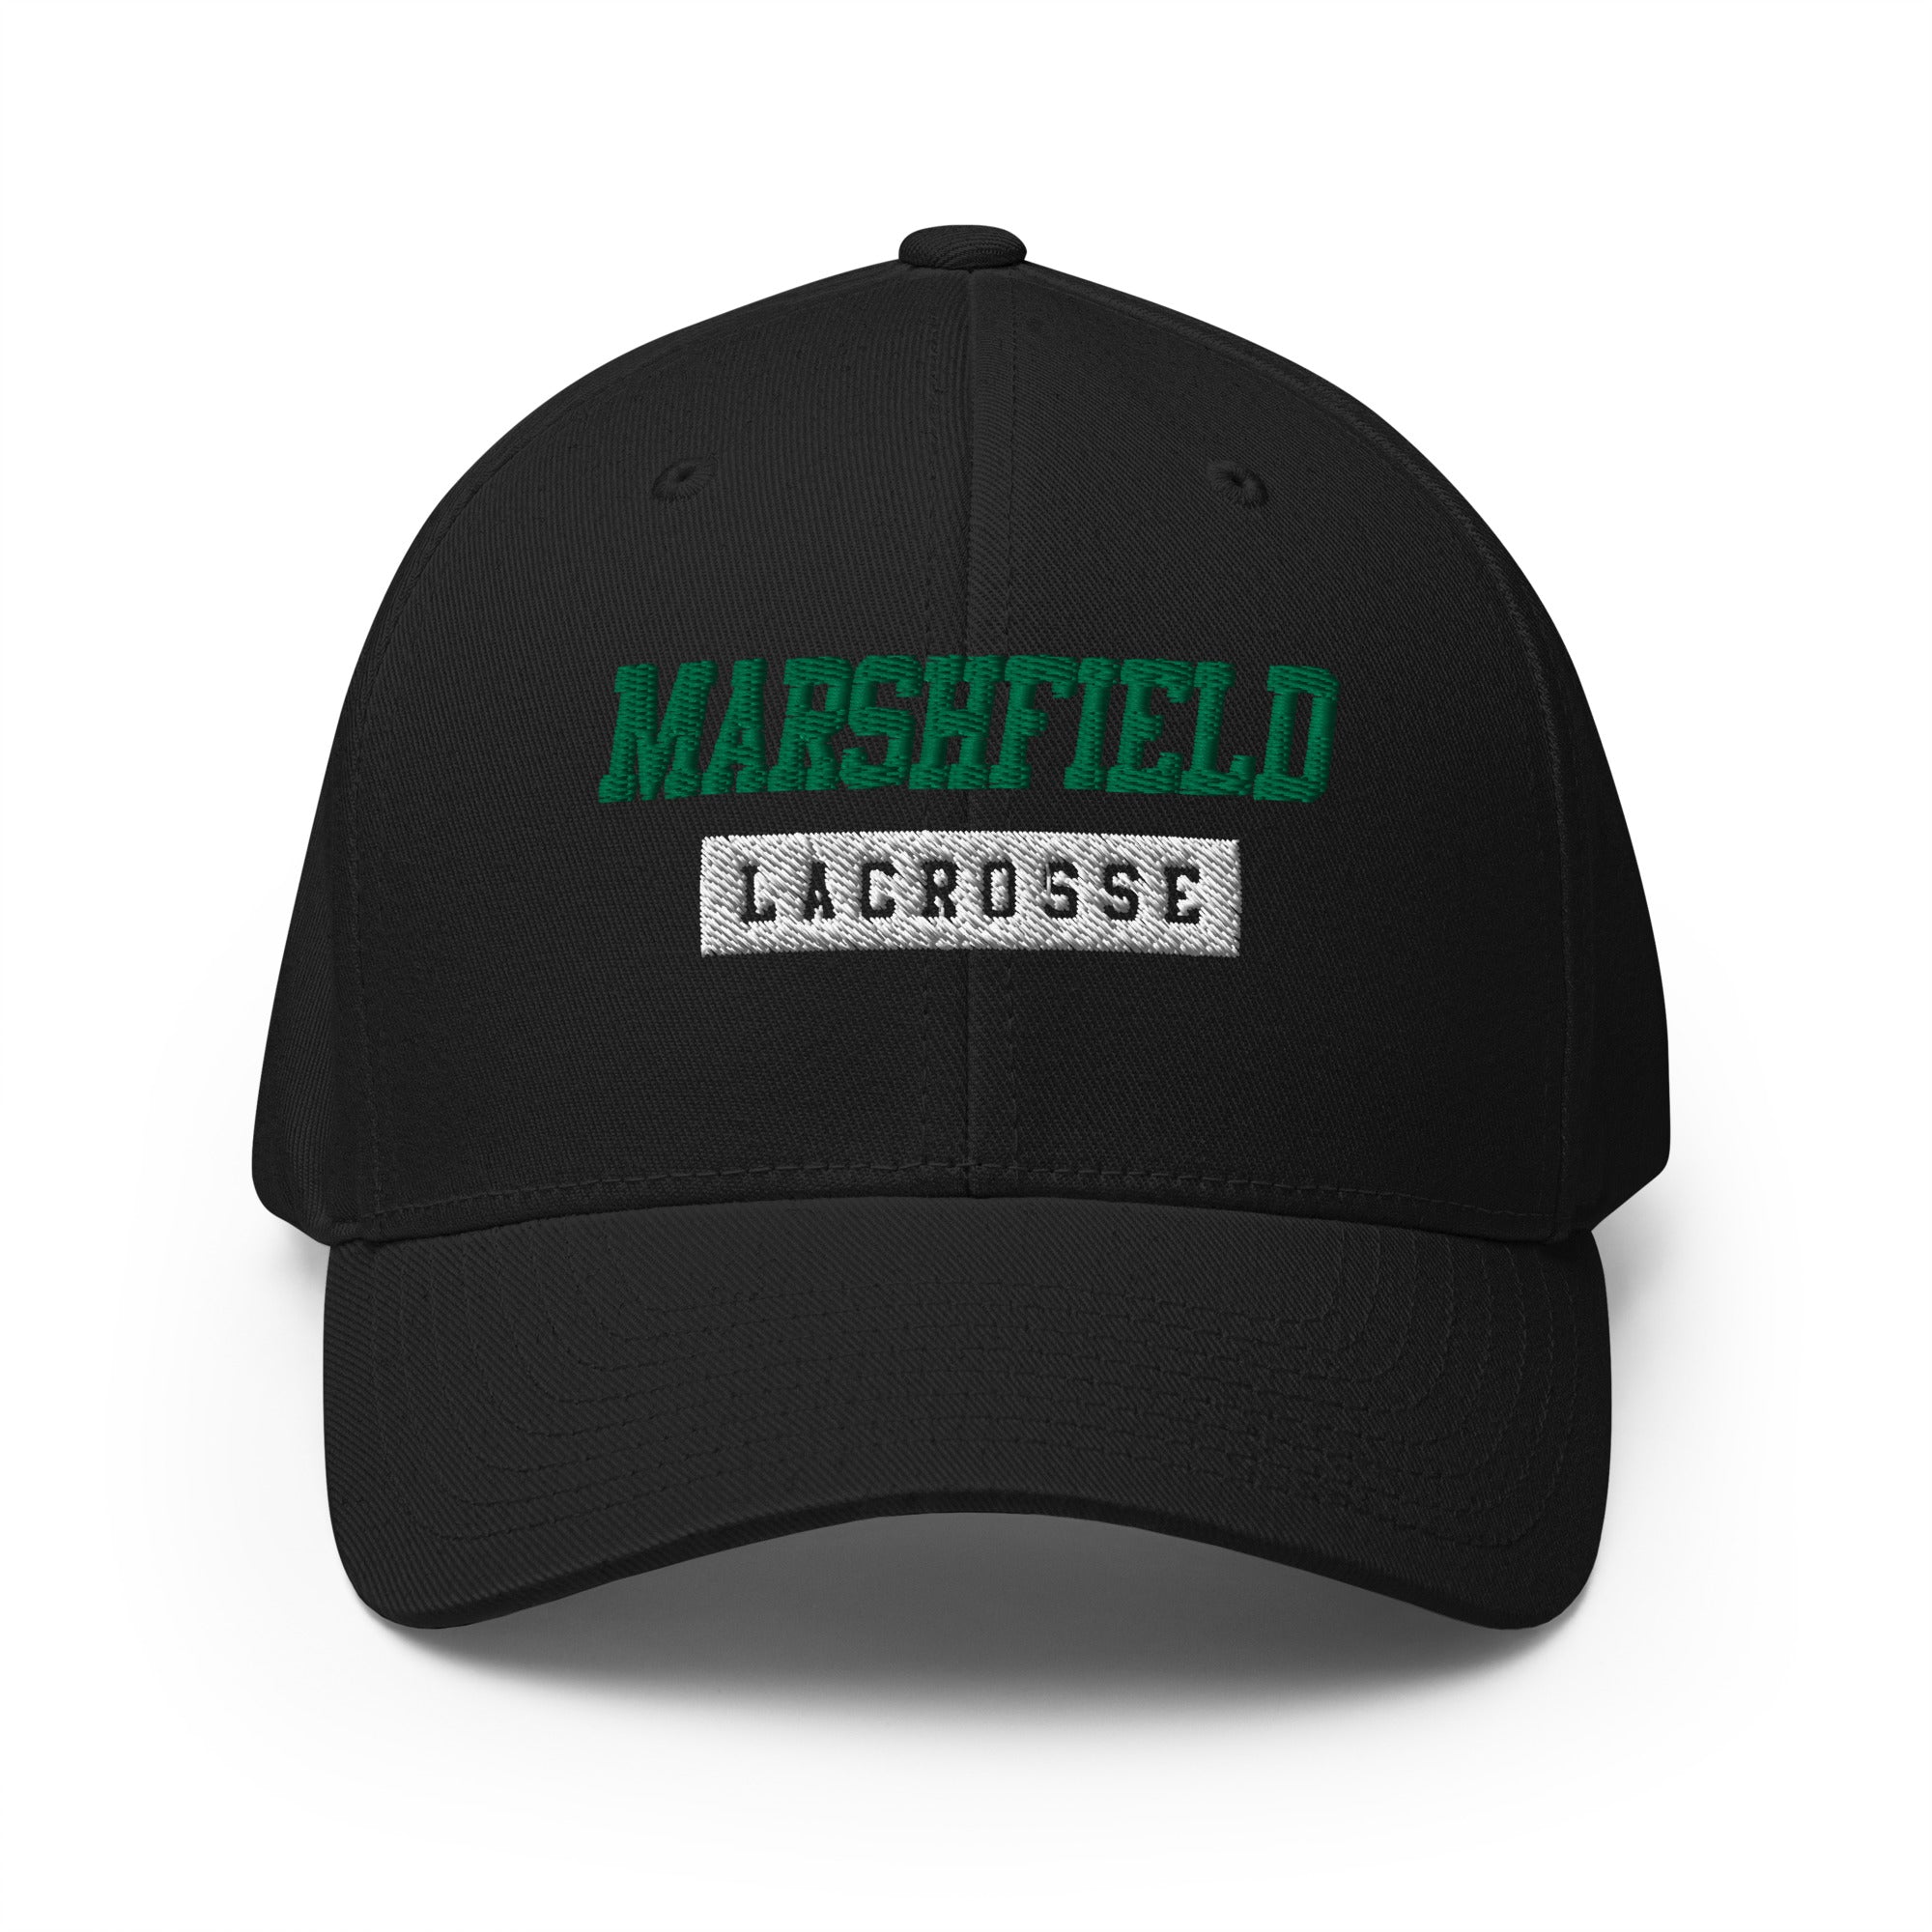 Marshfield Structured Twill Cap